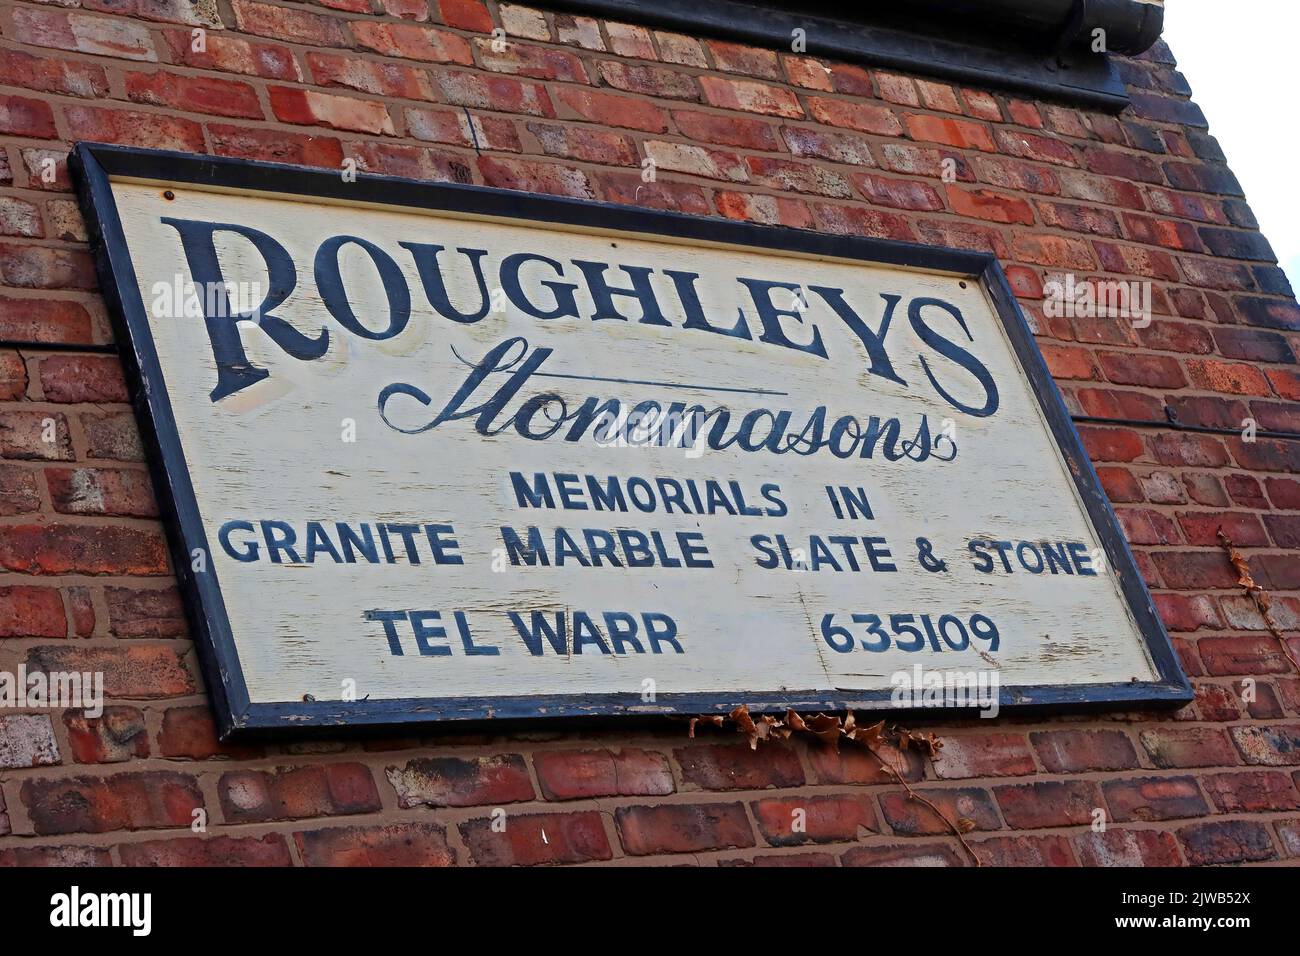 Roughleys Stonemasons, Memorials in granite, marble, slate & stone sign Warrington tel 635109 Stock Photo